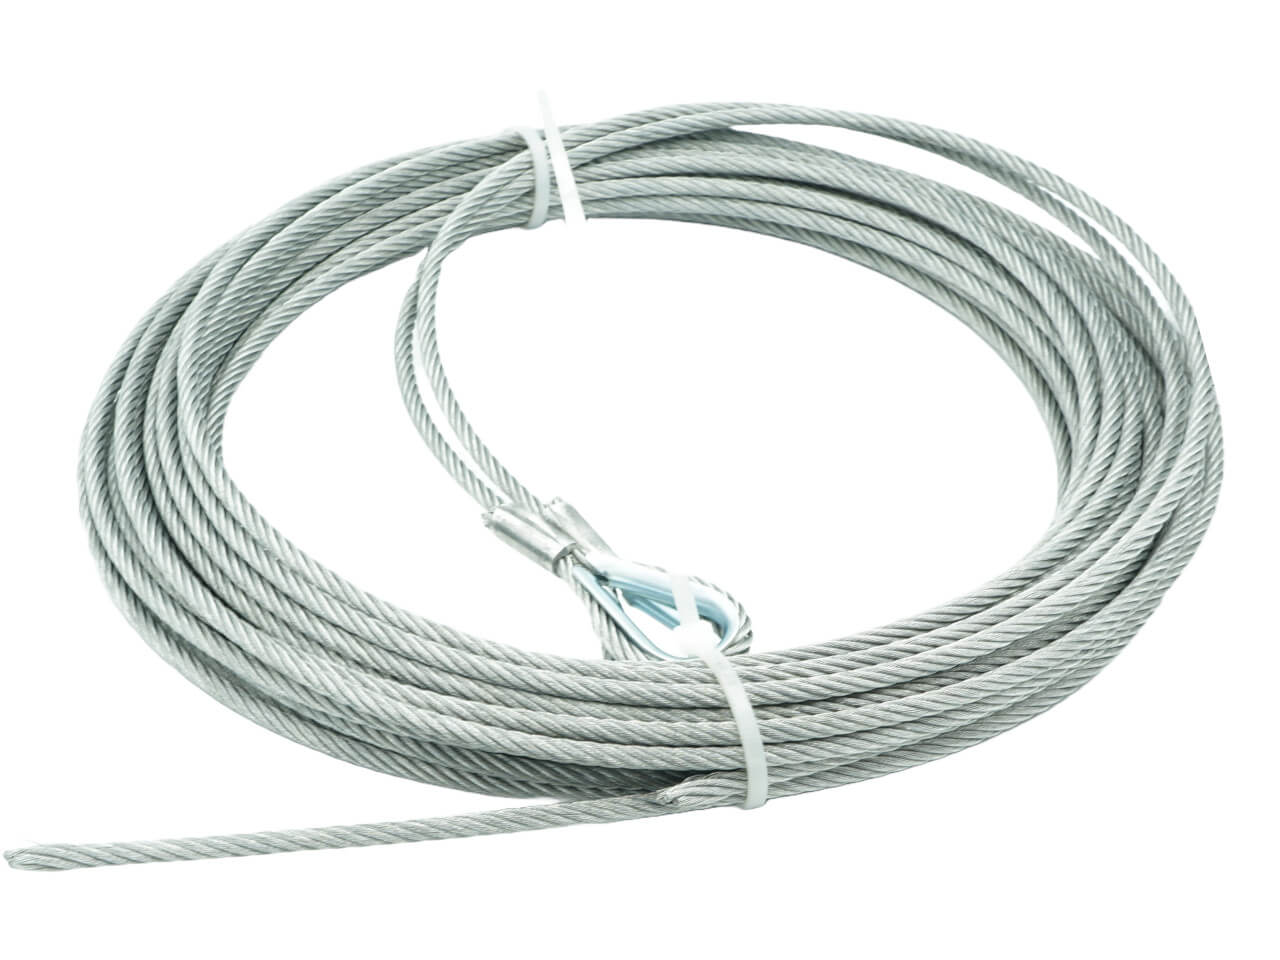 Cable Diameter 4,0mm Length 4m